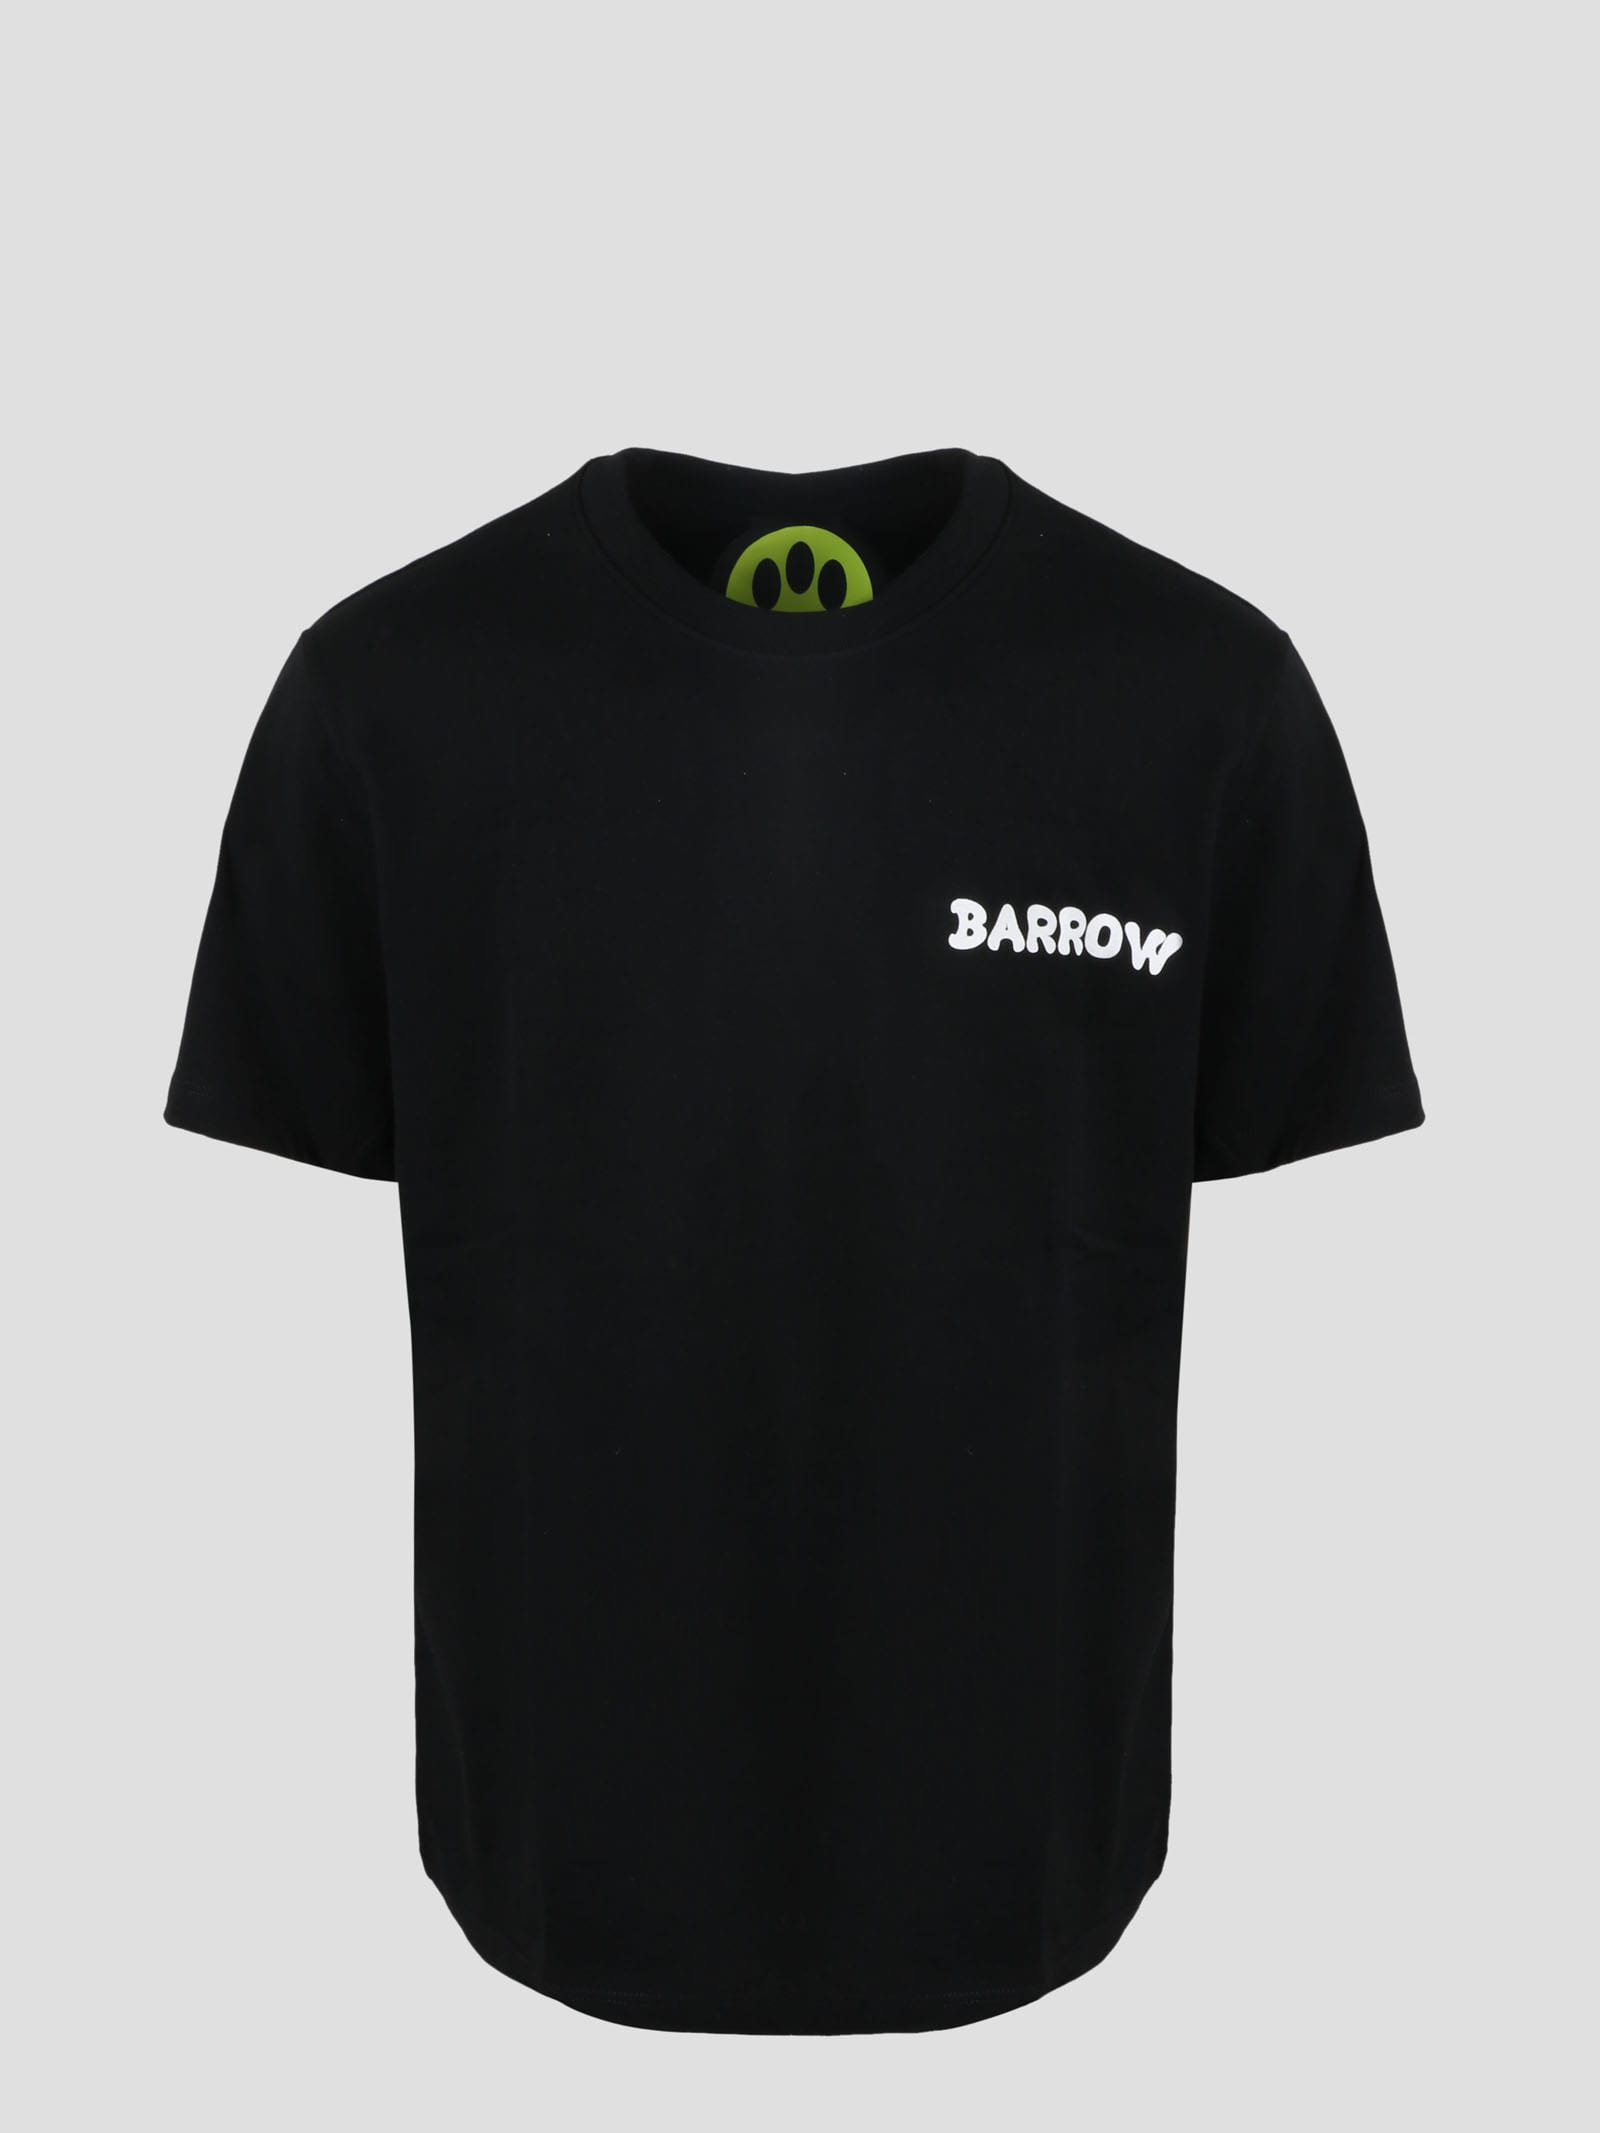 Barrow Enjoy Your Trip T-shirt